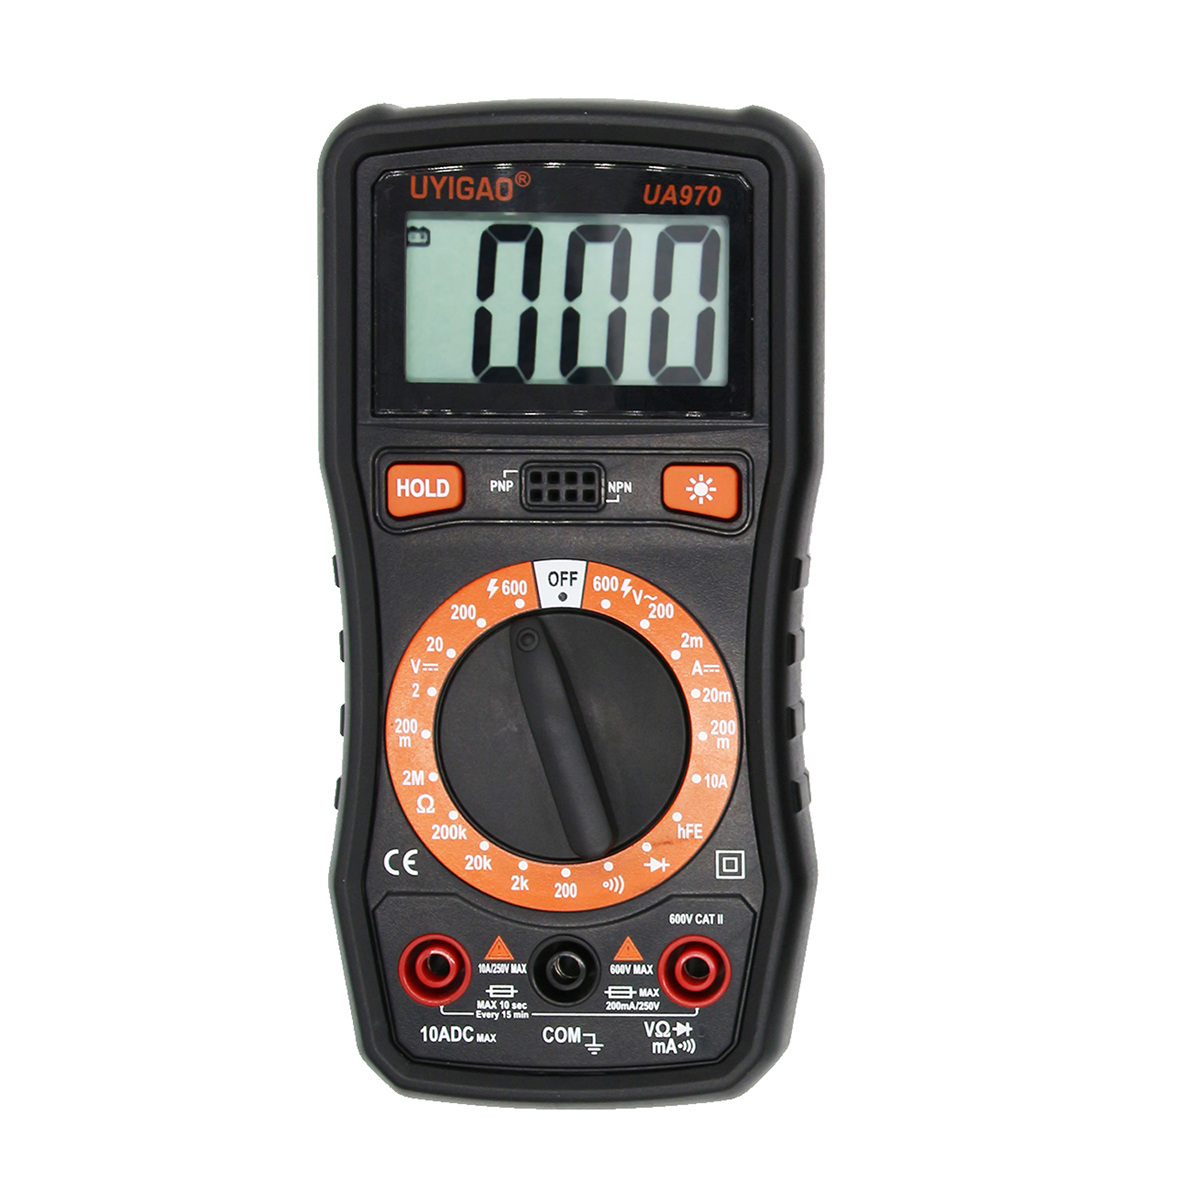 UYIGAO-UA971-LCD-Voltmeter-Ammeter-Multimeter-Temperature-Diode-Tester-with-Temperature-Measurement-1309950-3